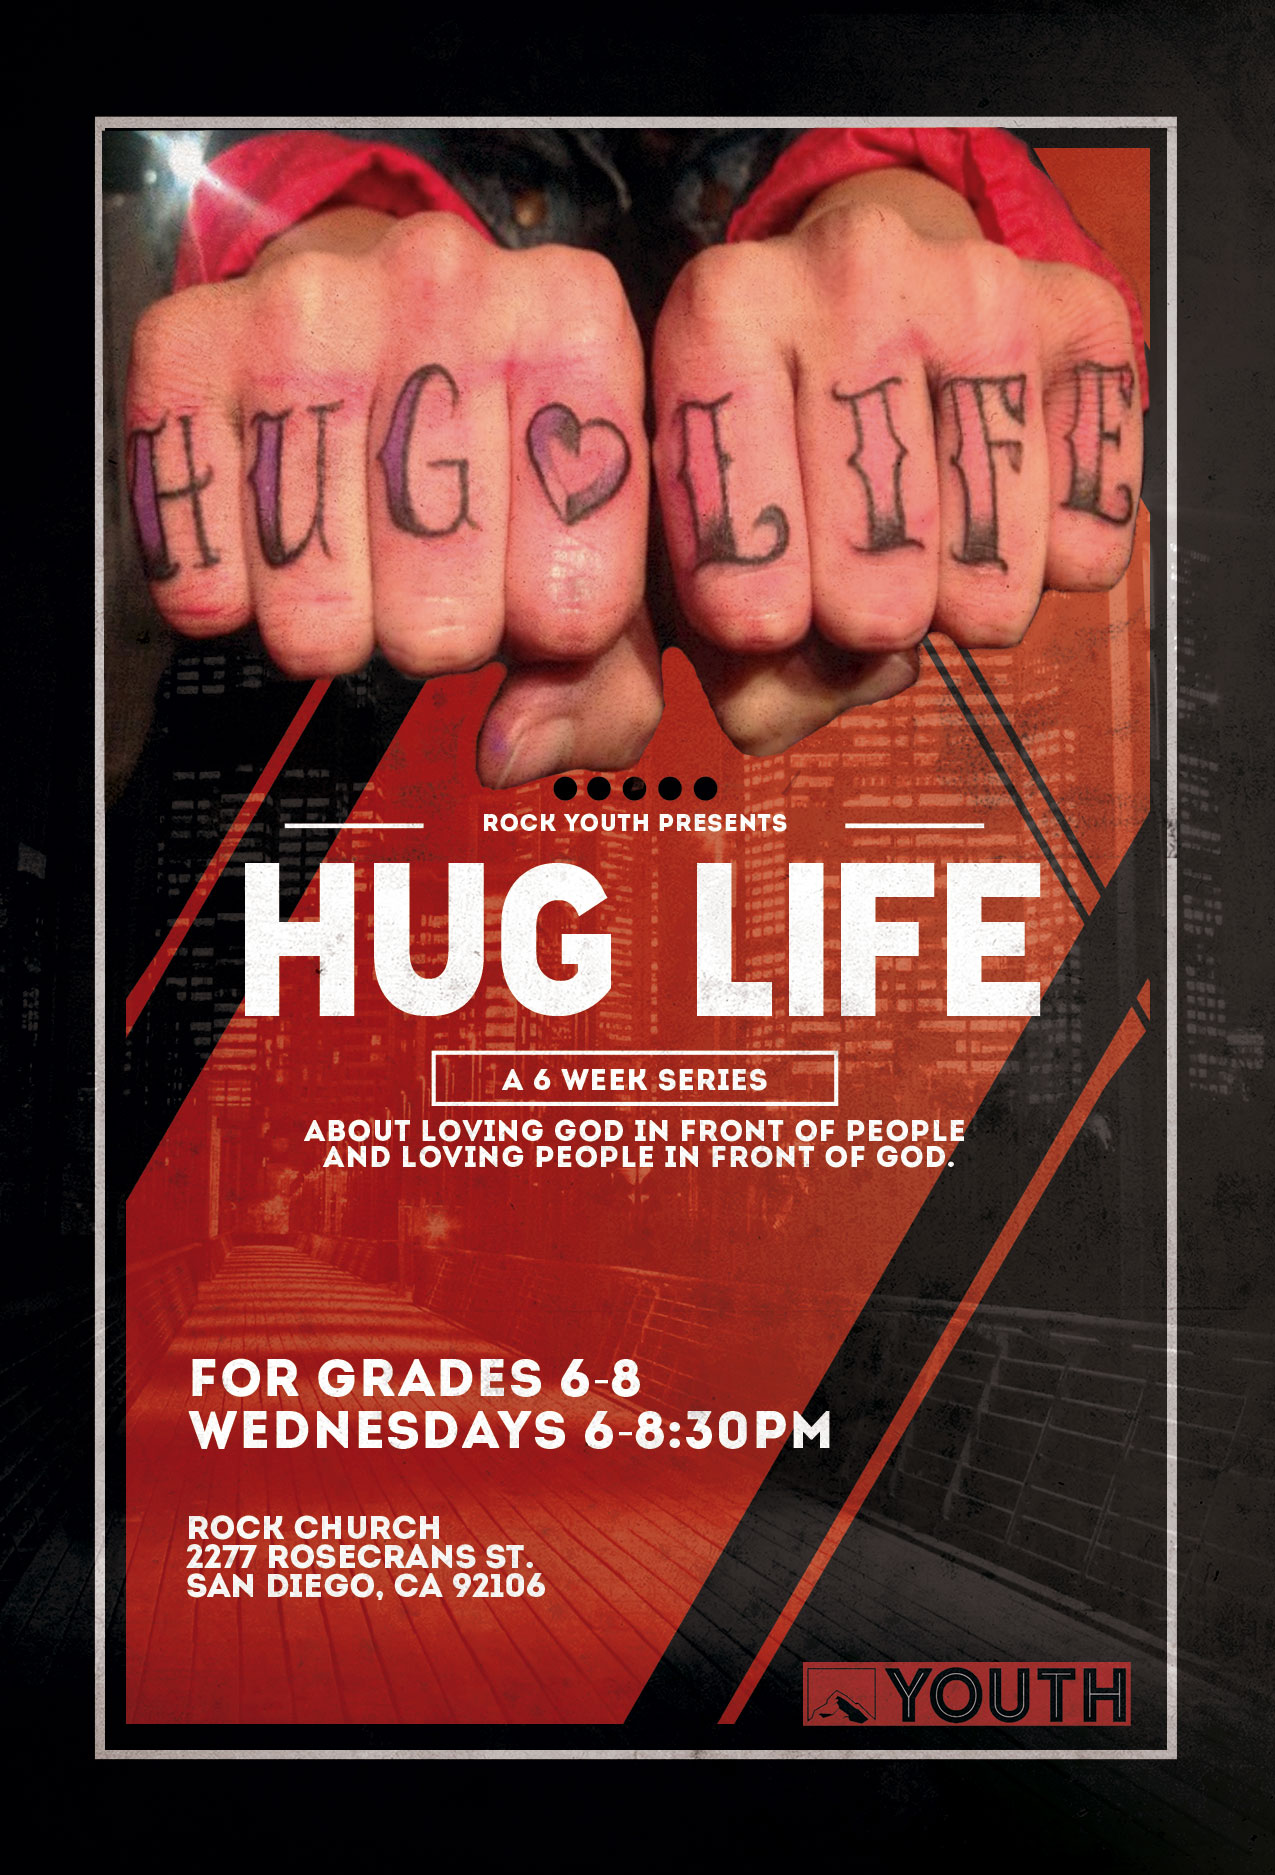 HUG_LIFE_ROCK_YOUTH_web.jpg